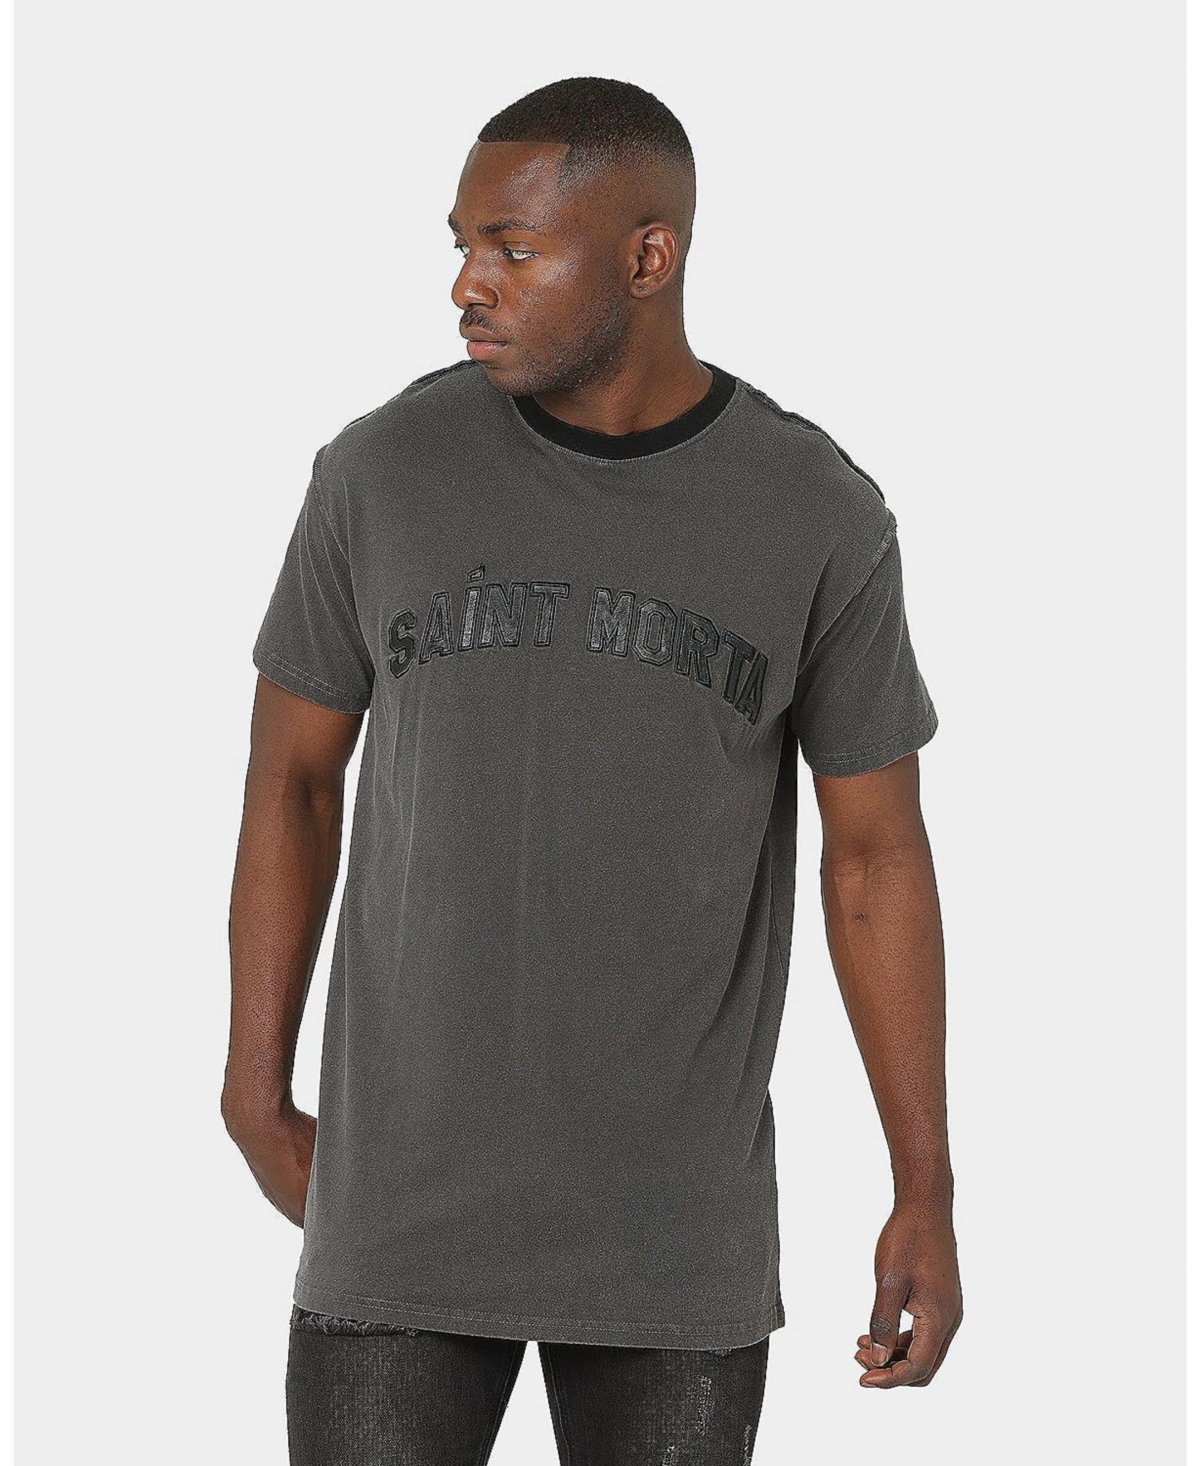 Men's Kingdom Lafayette T-Shirt - Stone/black